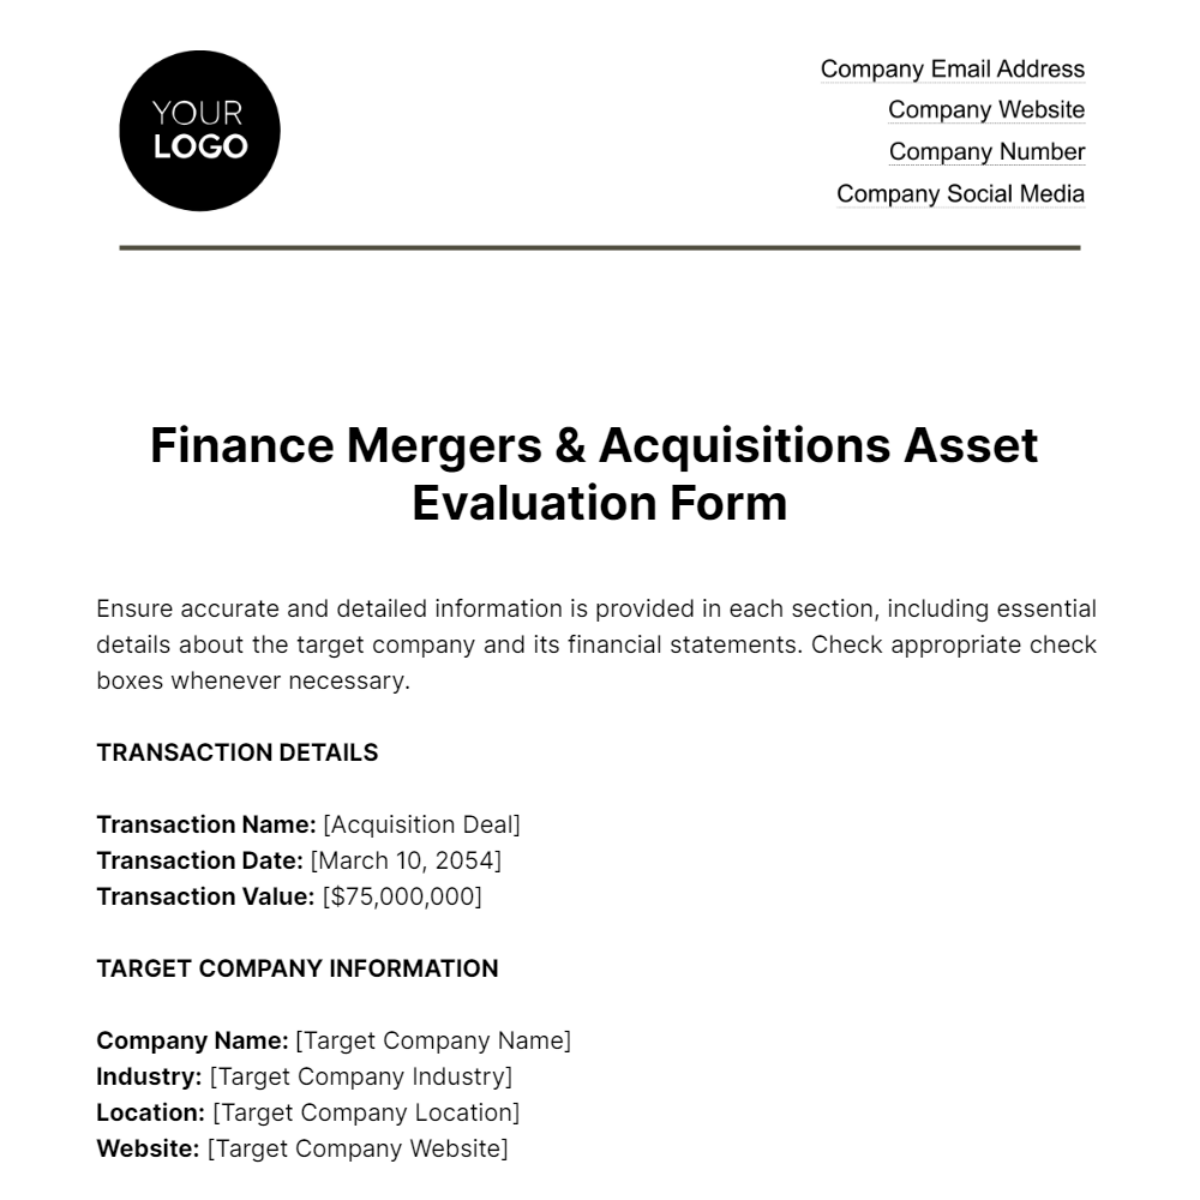 Finance Mergers & Acquisitions Asset Evaluation Form Template